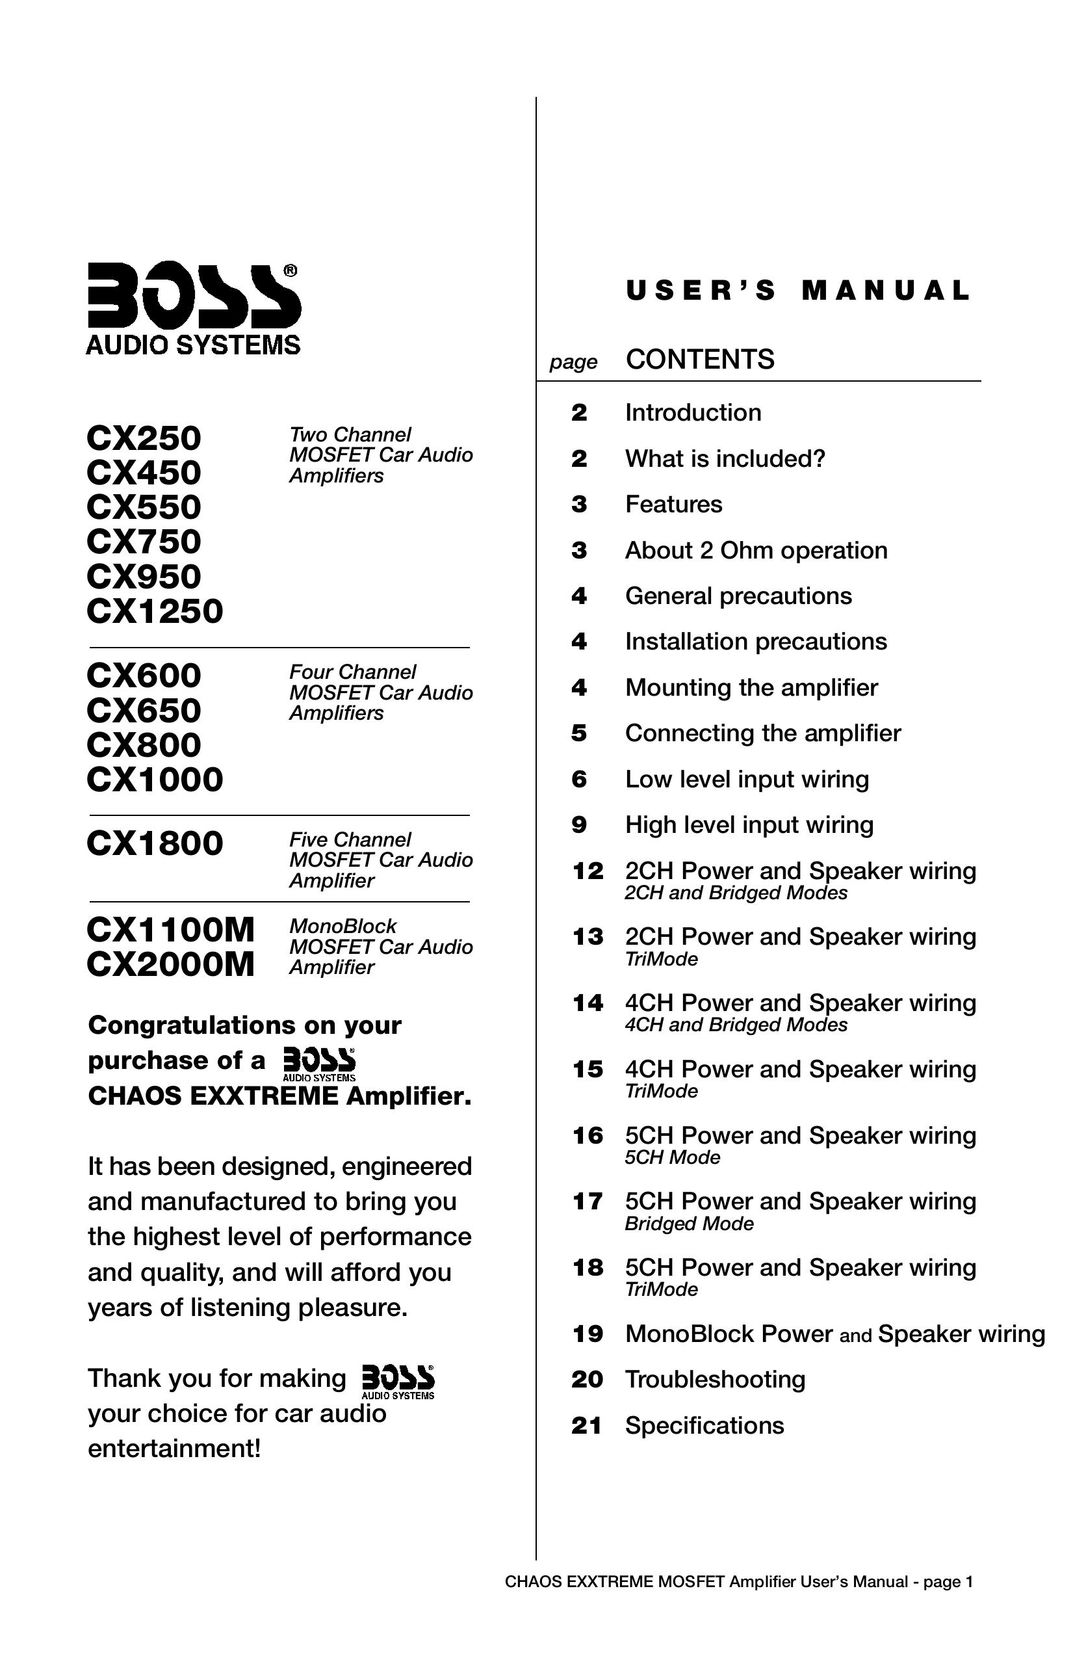 Boss Audio Systems CX1800 Car Amplifier User Manual